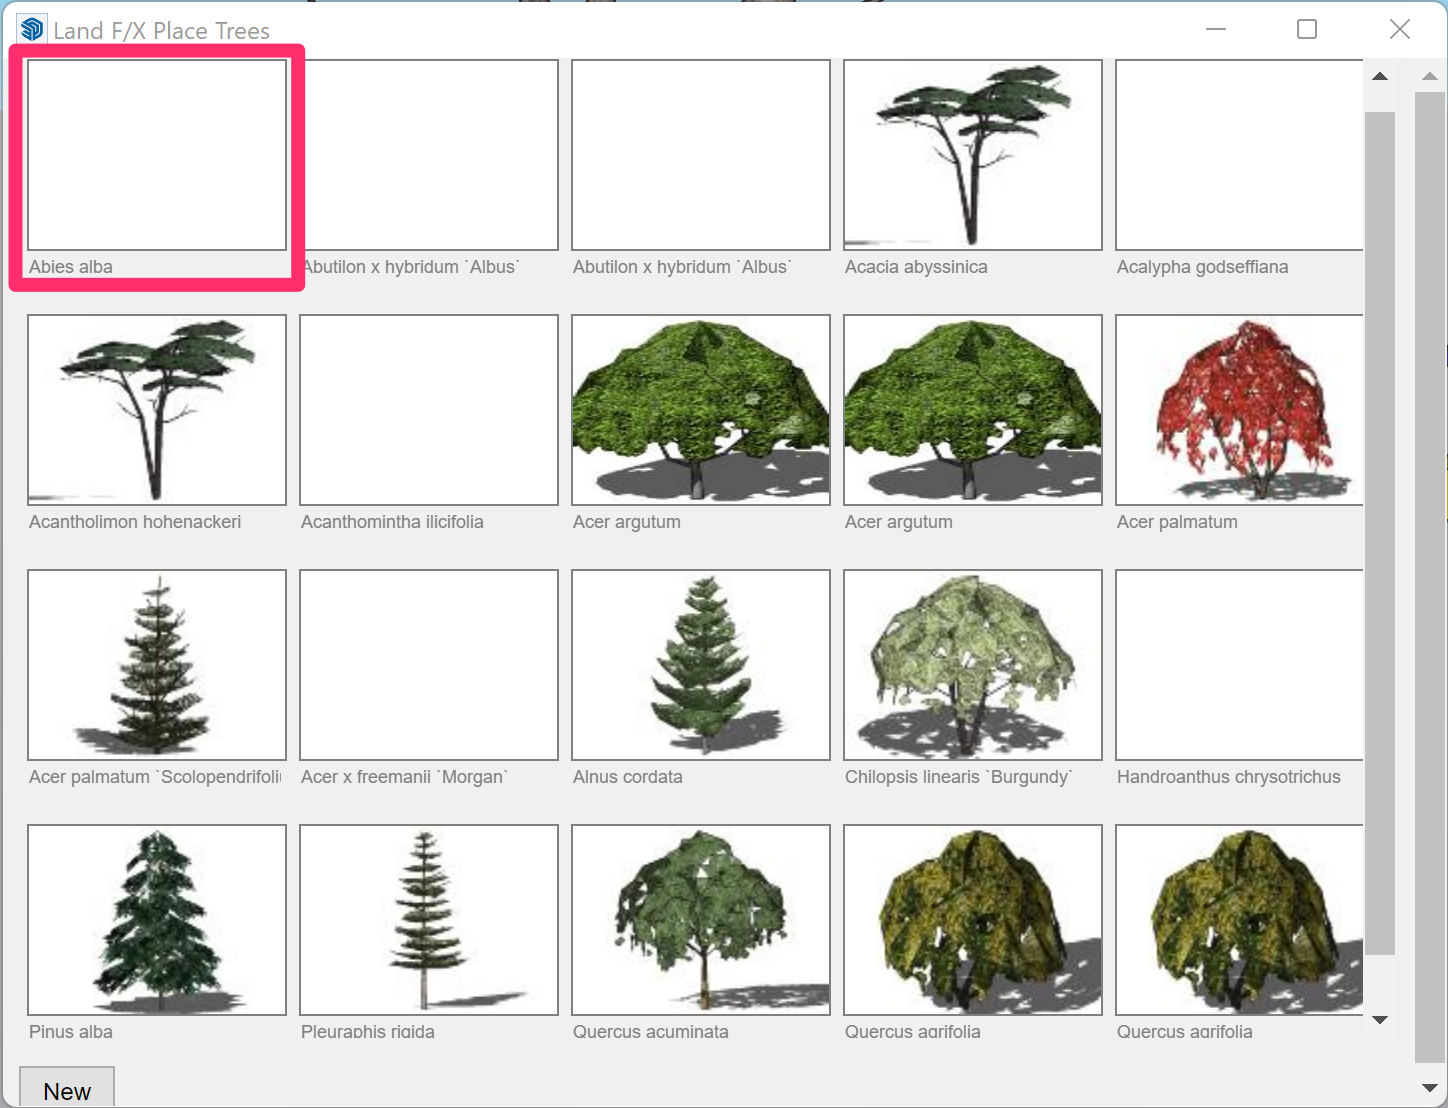 Land F/X Place Trees dialog box